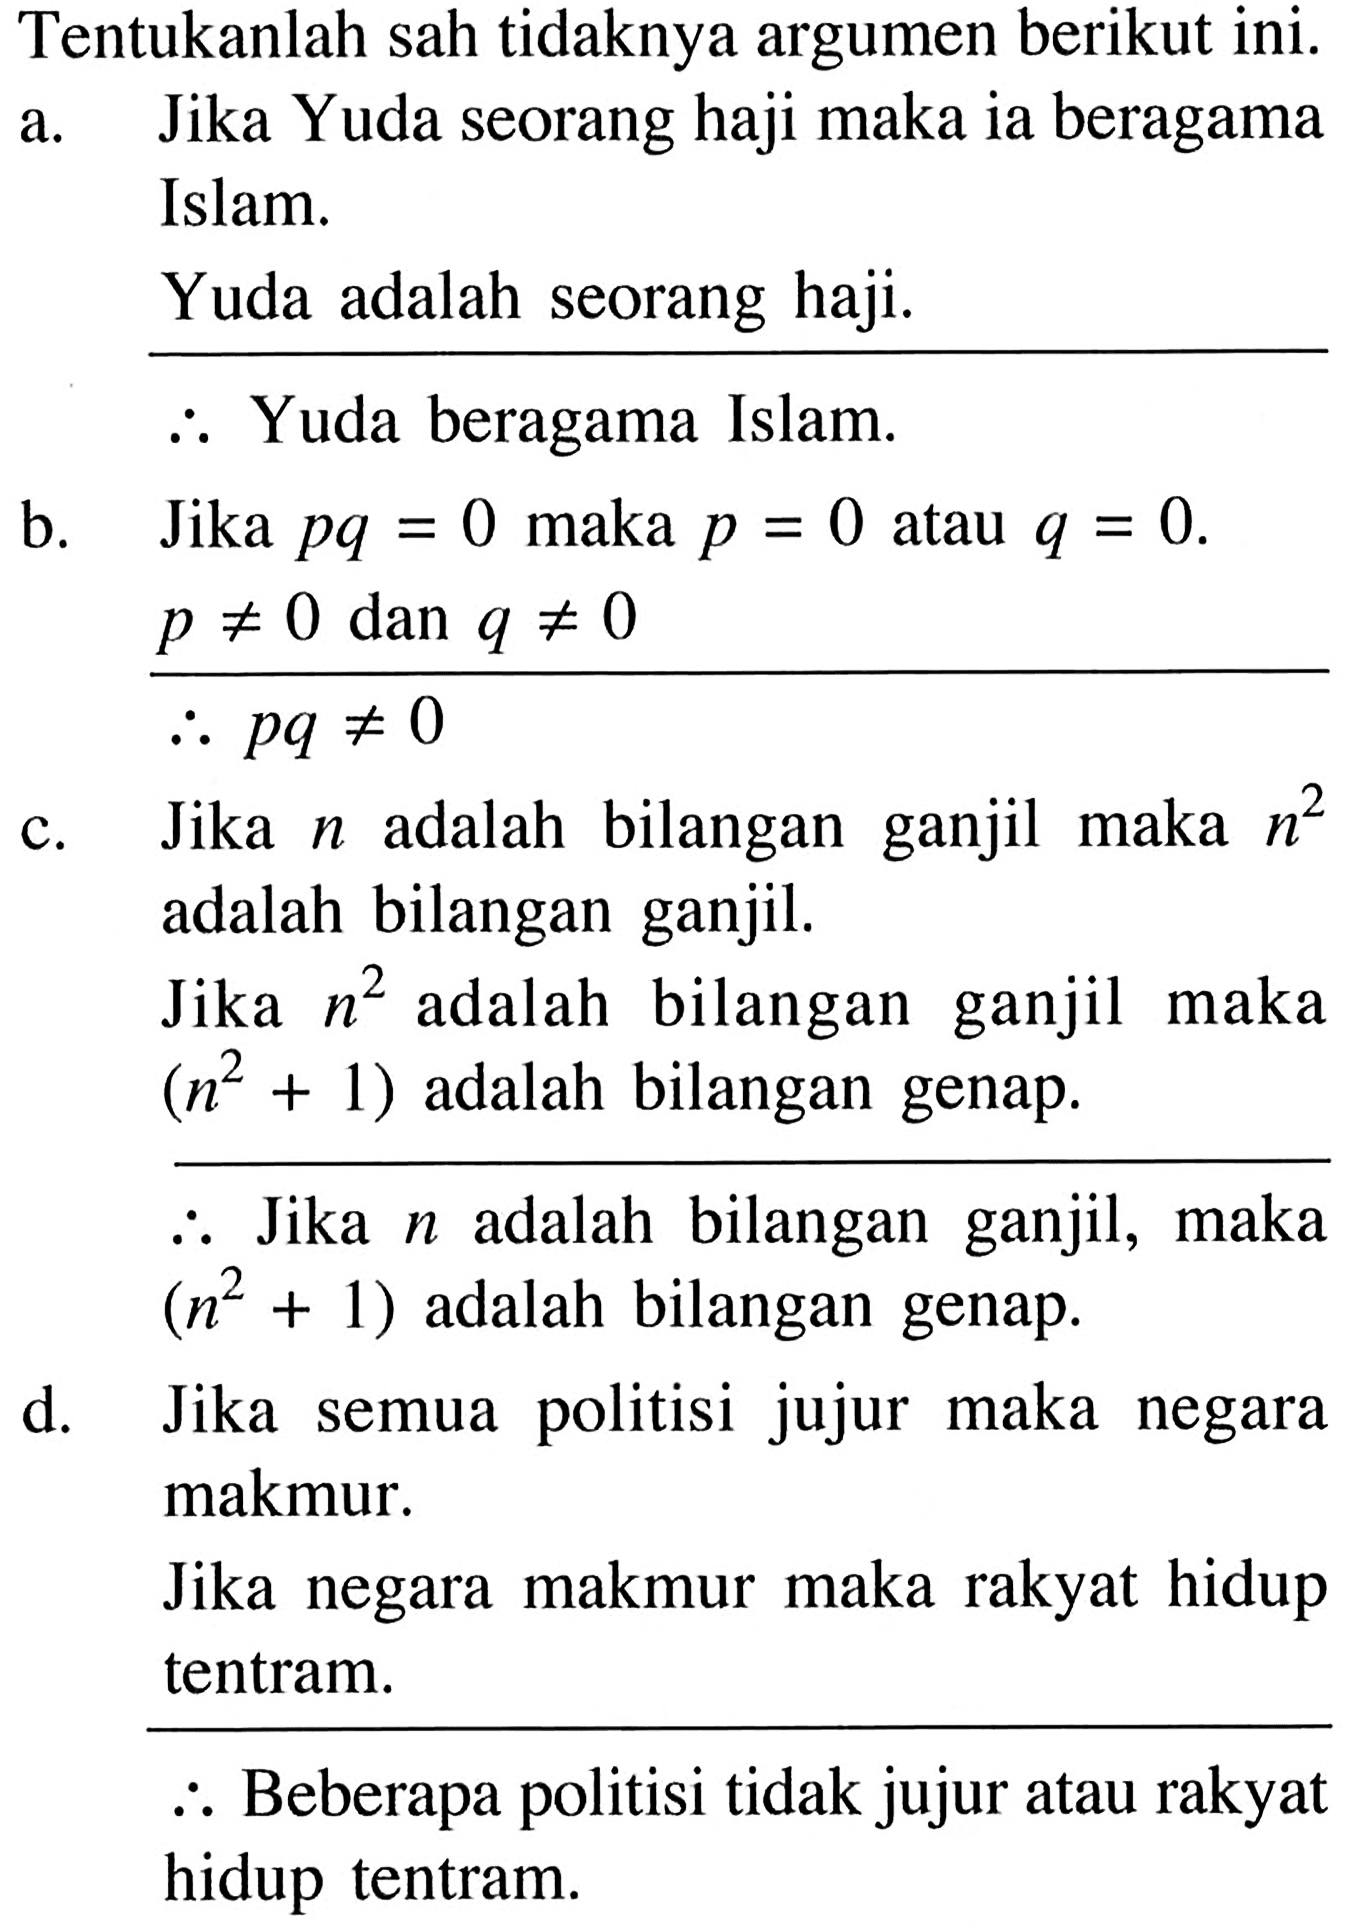 Tentukanlah sah tidaknya argumen berikut ini.
a. Jika Yuda seorang haji maka ia beragama
Islam.
Yuda adalah seorang haji.
Jadi, Yuda beragama Islam.
b. Jika pq=0 maka p=0 atau q=0. 
 p =/= 0 dan q =/= 0 
 Jadi, pq =/= 0 
c. Jika n adalah bilangan ganjil maka n^2 
adalah bilangan ganjil.
Jika n^2 adalah bilangan ganjil maka
 (n^2+1) adalah bilangan genap.
 Jadi, Jika  n  adalah bilangan ganjil, maka
 (n^2+1) adalah bilangan genap.
d. Jika semua politisi jujur maka negara
makmur.
Jika negara makmur maka rakyat hidup
tentram.
Jadi, Beberapa politisi tidak jujur atau rakyat
hidup tentram.